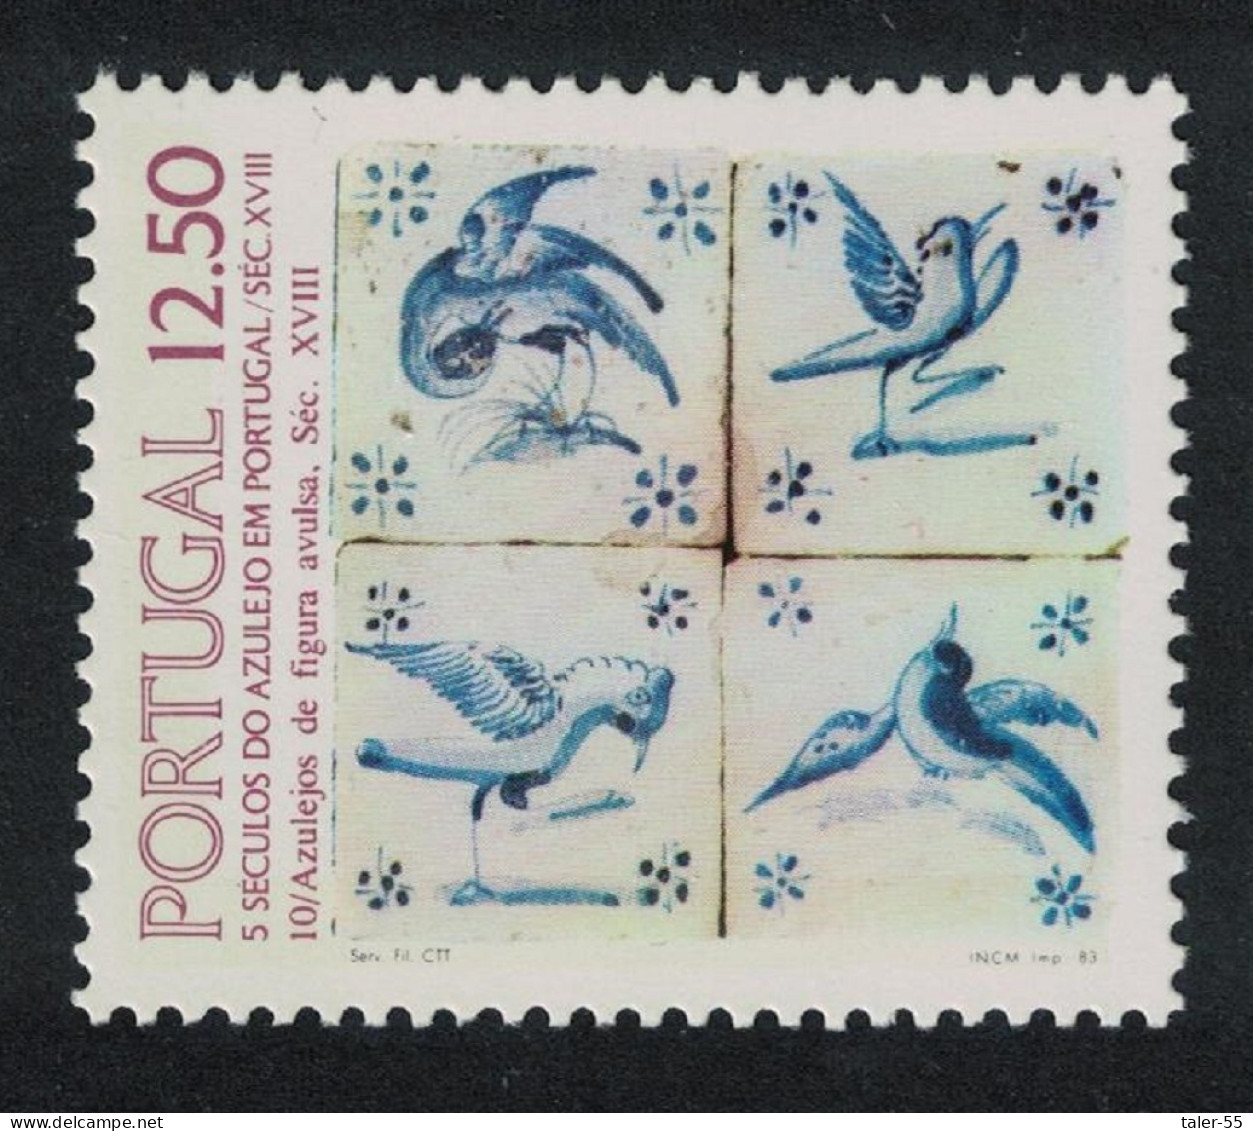 Portugal Birds Tiles 10th Series 1983 MNH SG#1926 - Nuevos